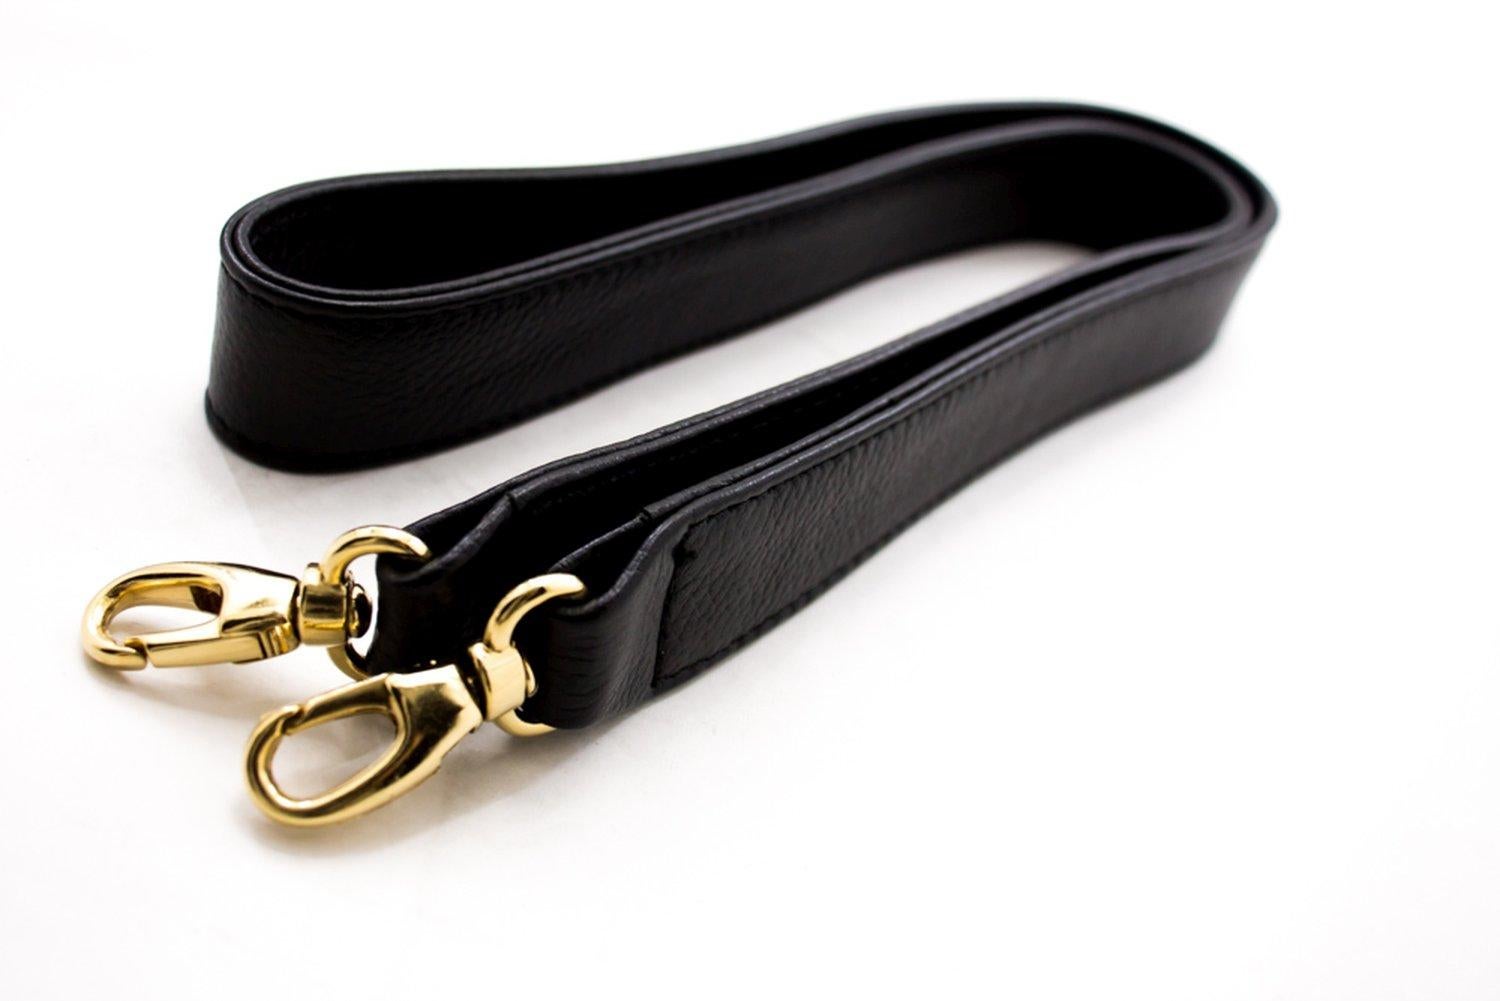 CHANEL Executive Tote Caviar Shoulder Bag Handbag Black Gold Strap 15